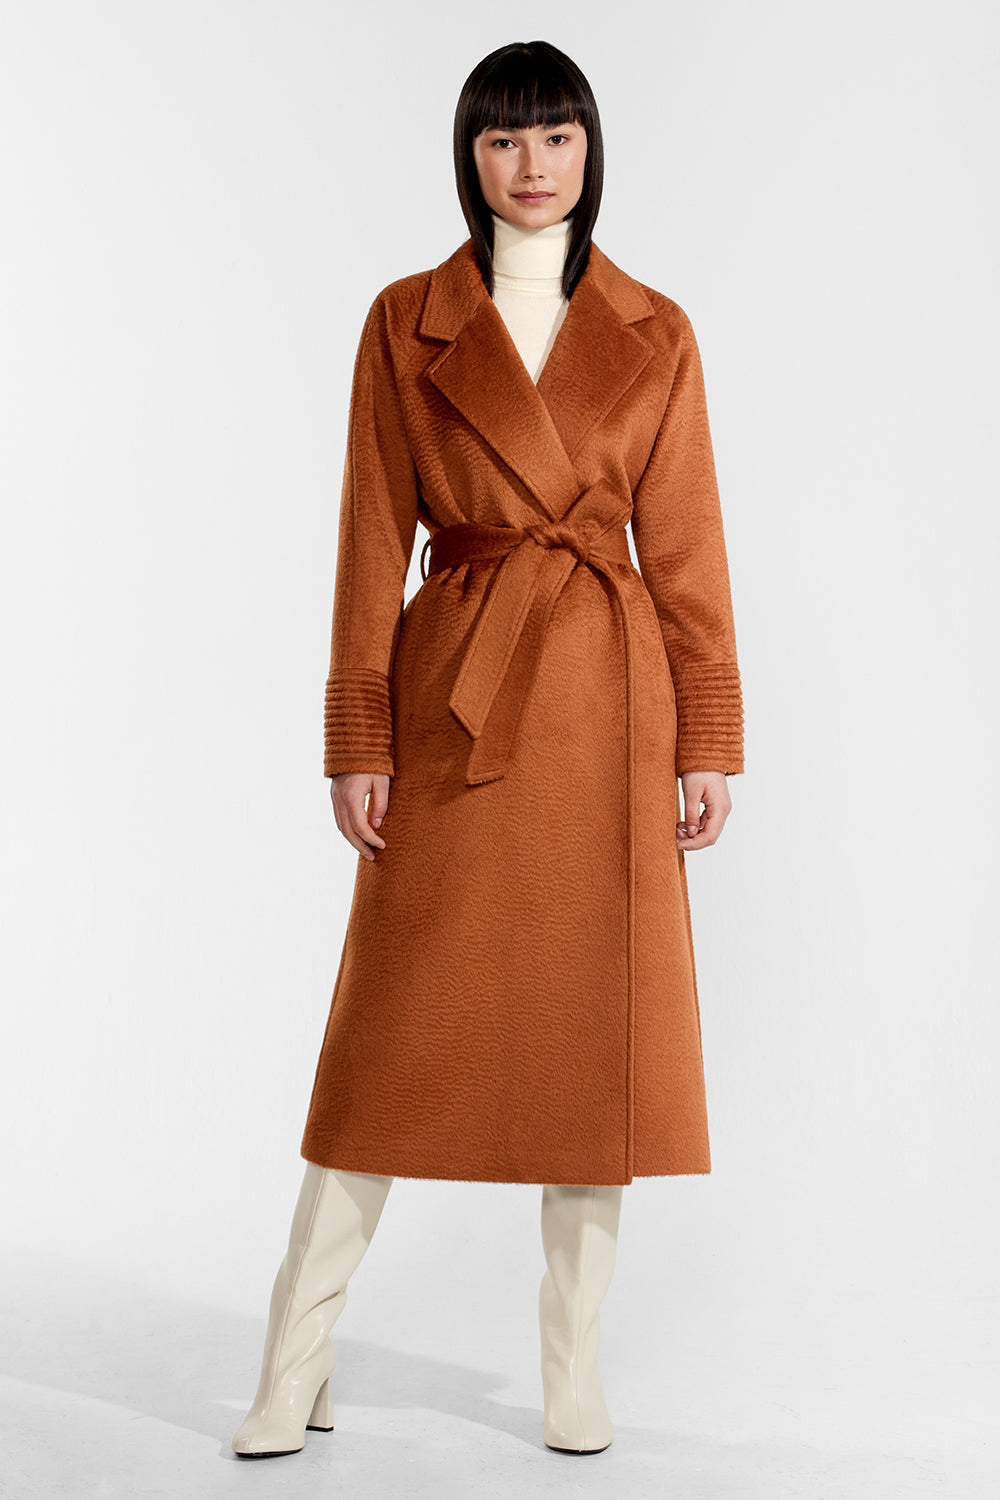 Louis Vuitton - Belted Double Face Hooded Wrap Coat - Camel - Women - Size: 34 - Luxury